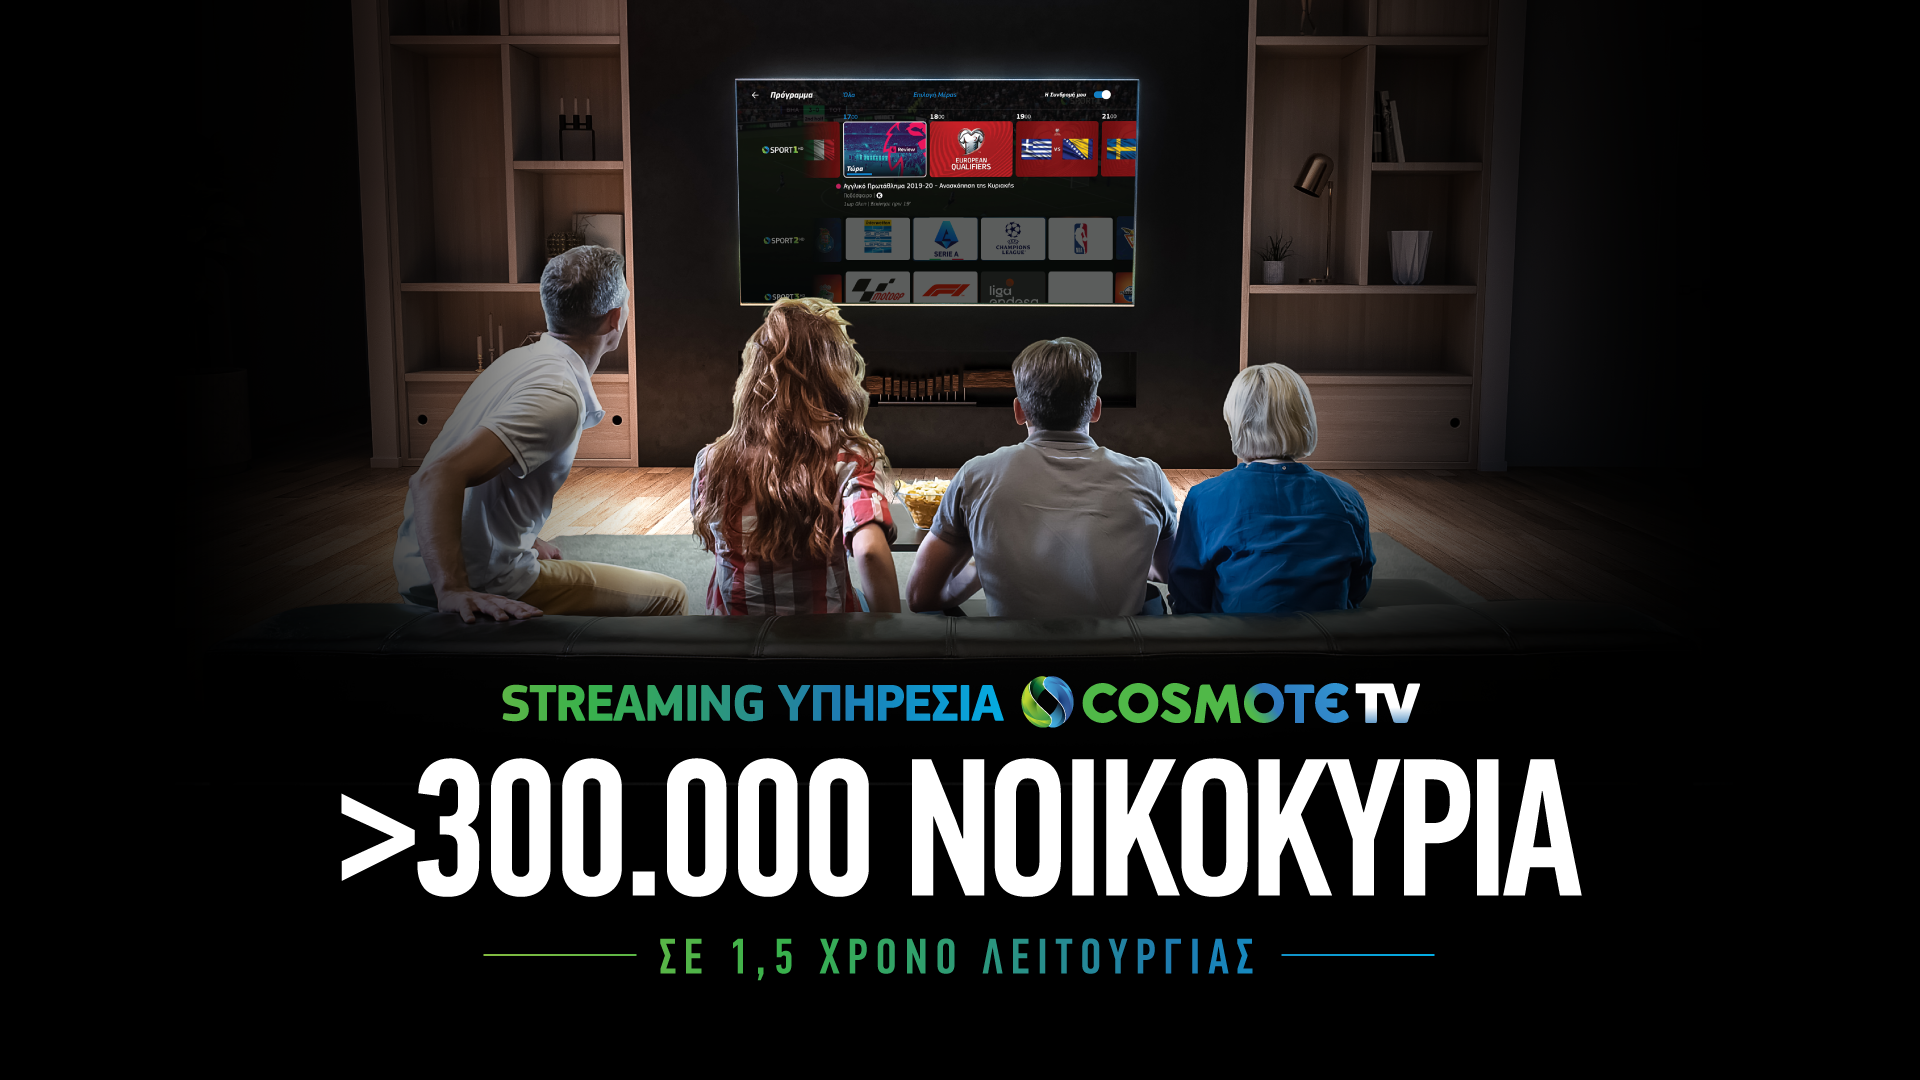 COSMOTE TV: Ξεπέρασαν τις 300 χιλ.τα νοικοκυριά που έχουν πρόσβαση στη streaming υπηρεσία